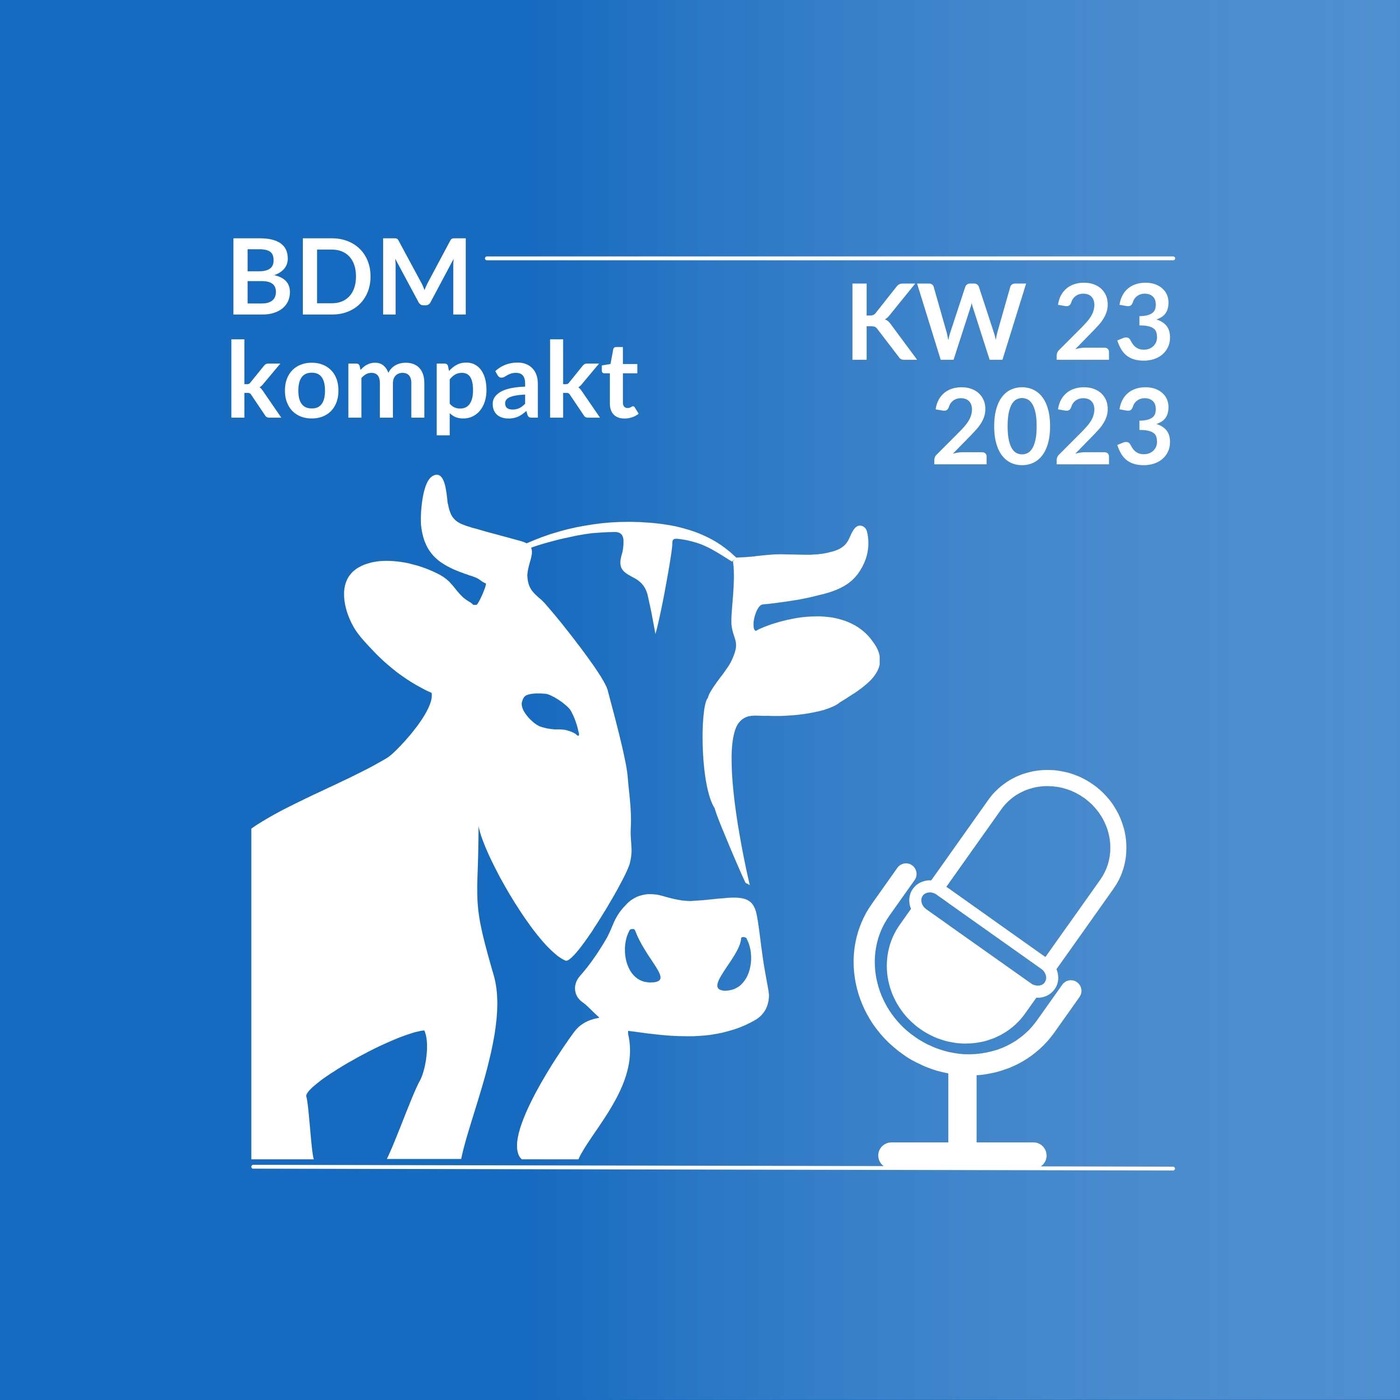 BDM kompakt KW 23/2023